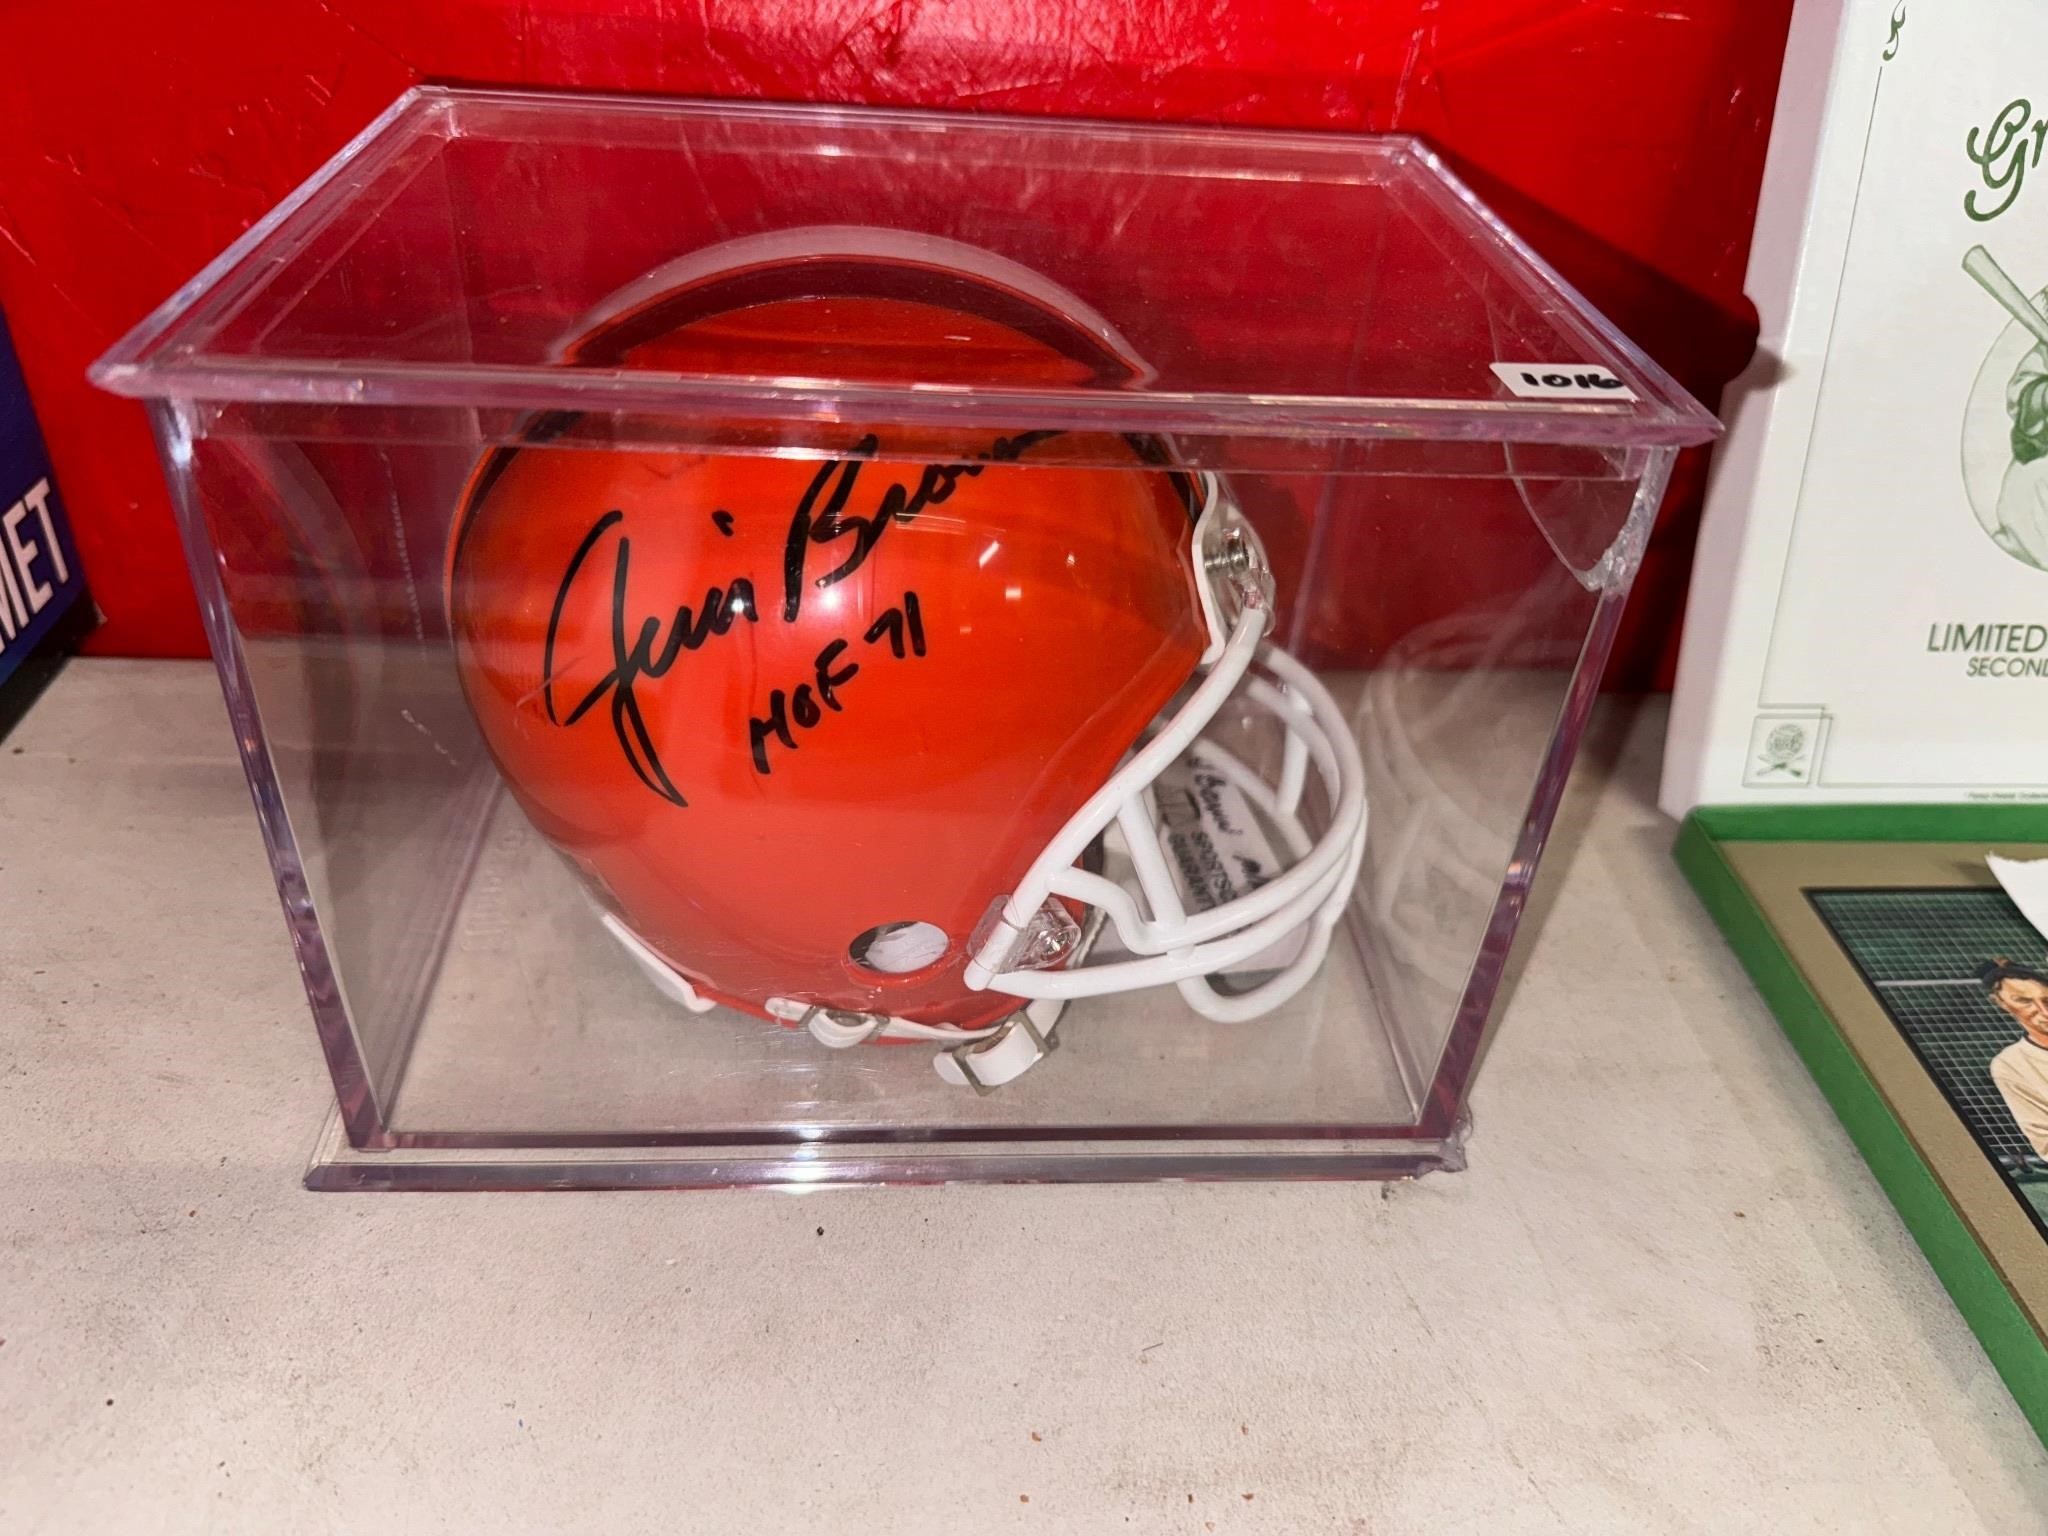 Jim Brown Autographed Helmet - Mini